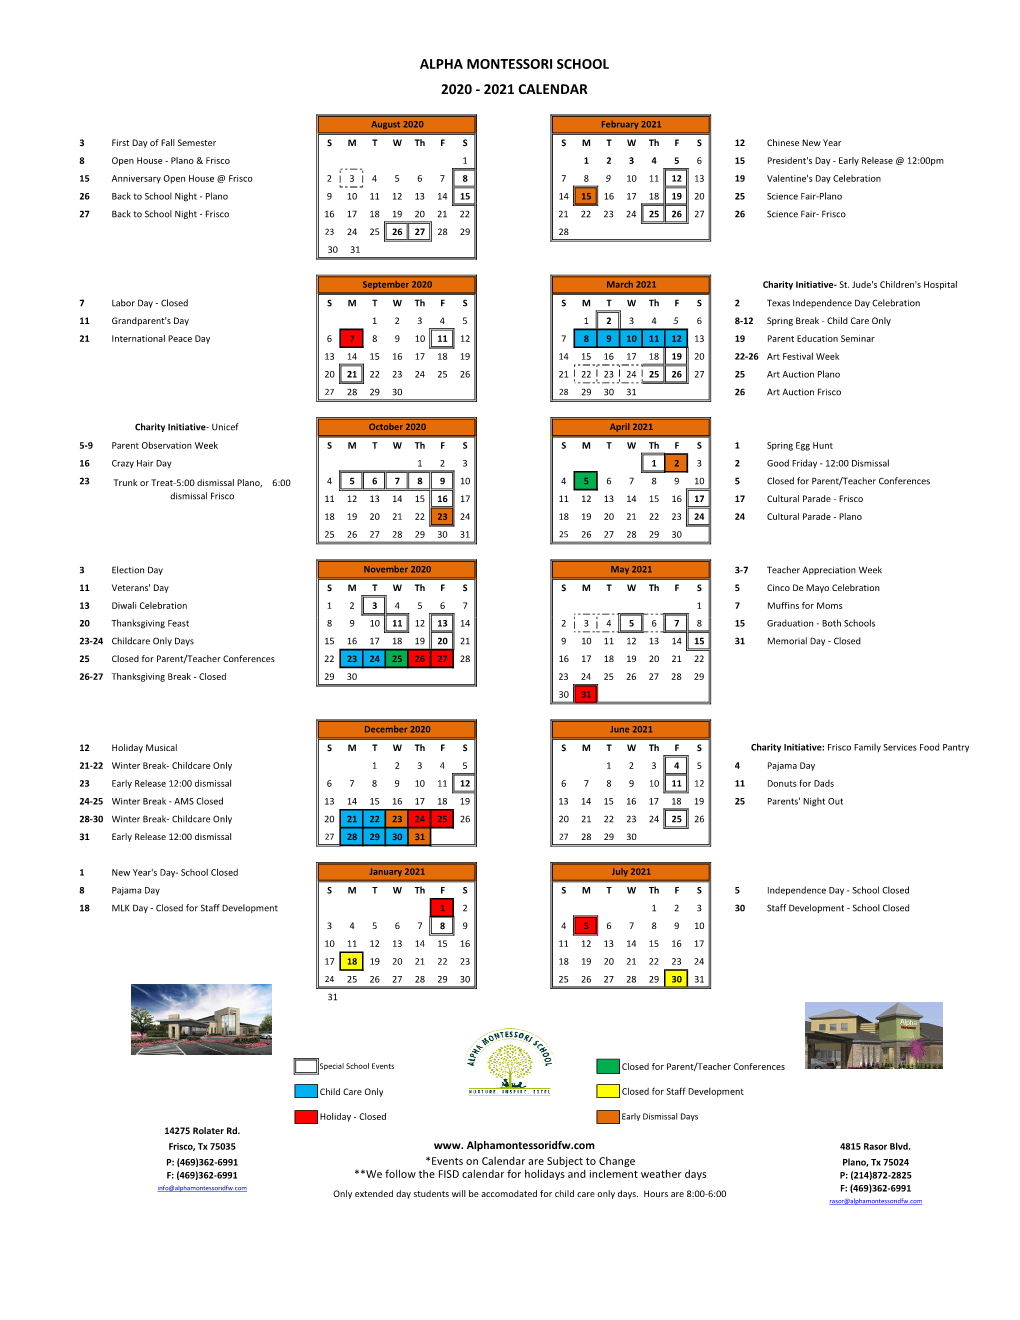 AMS-2020-2021-Calendar.Pdf